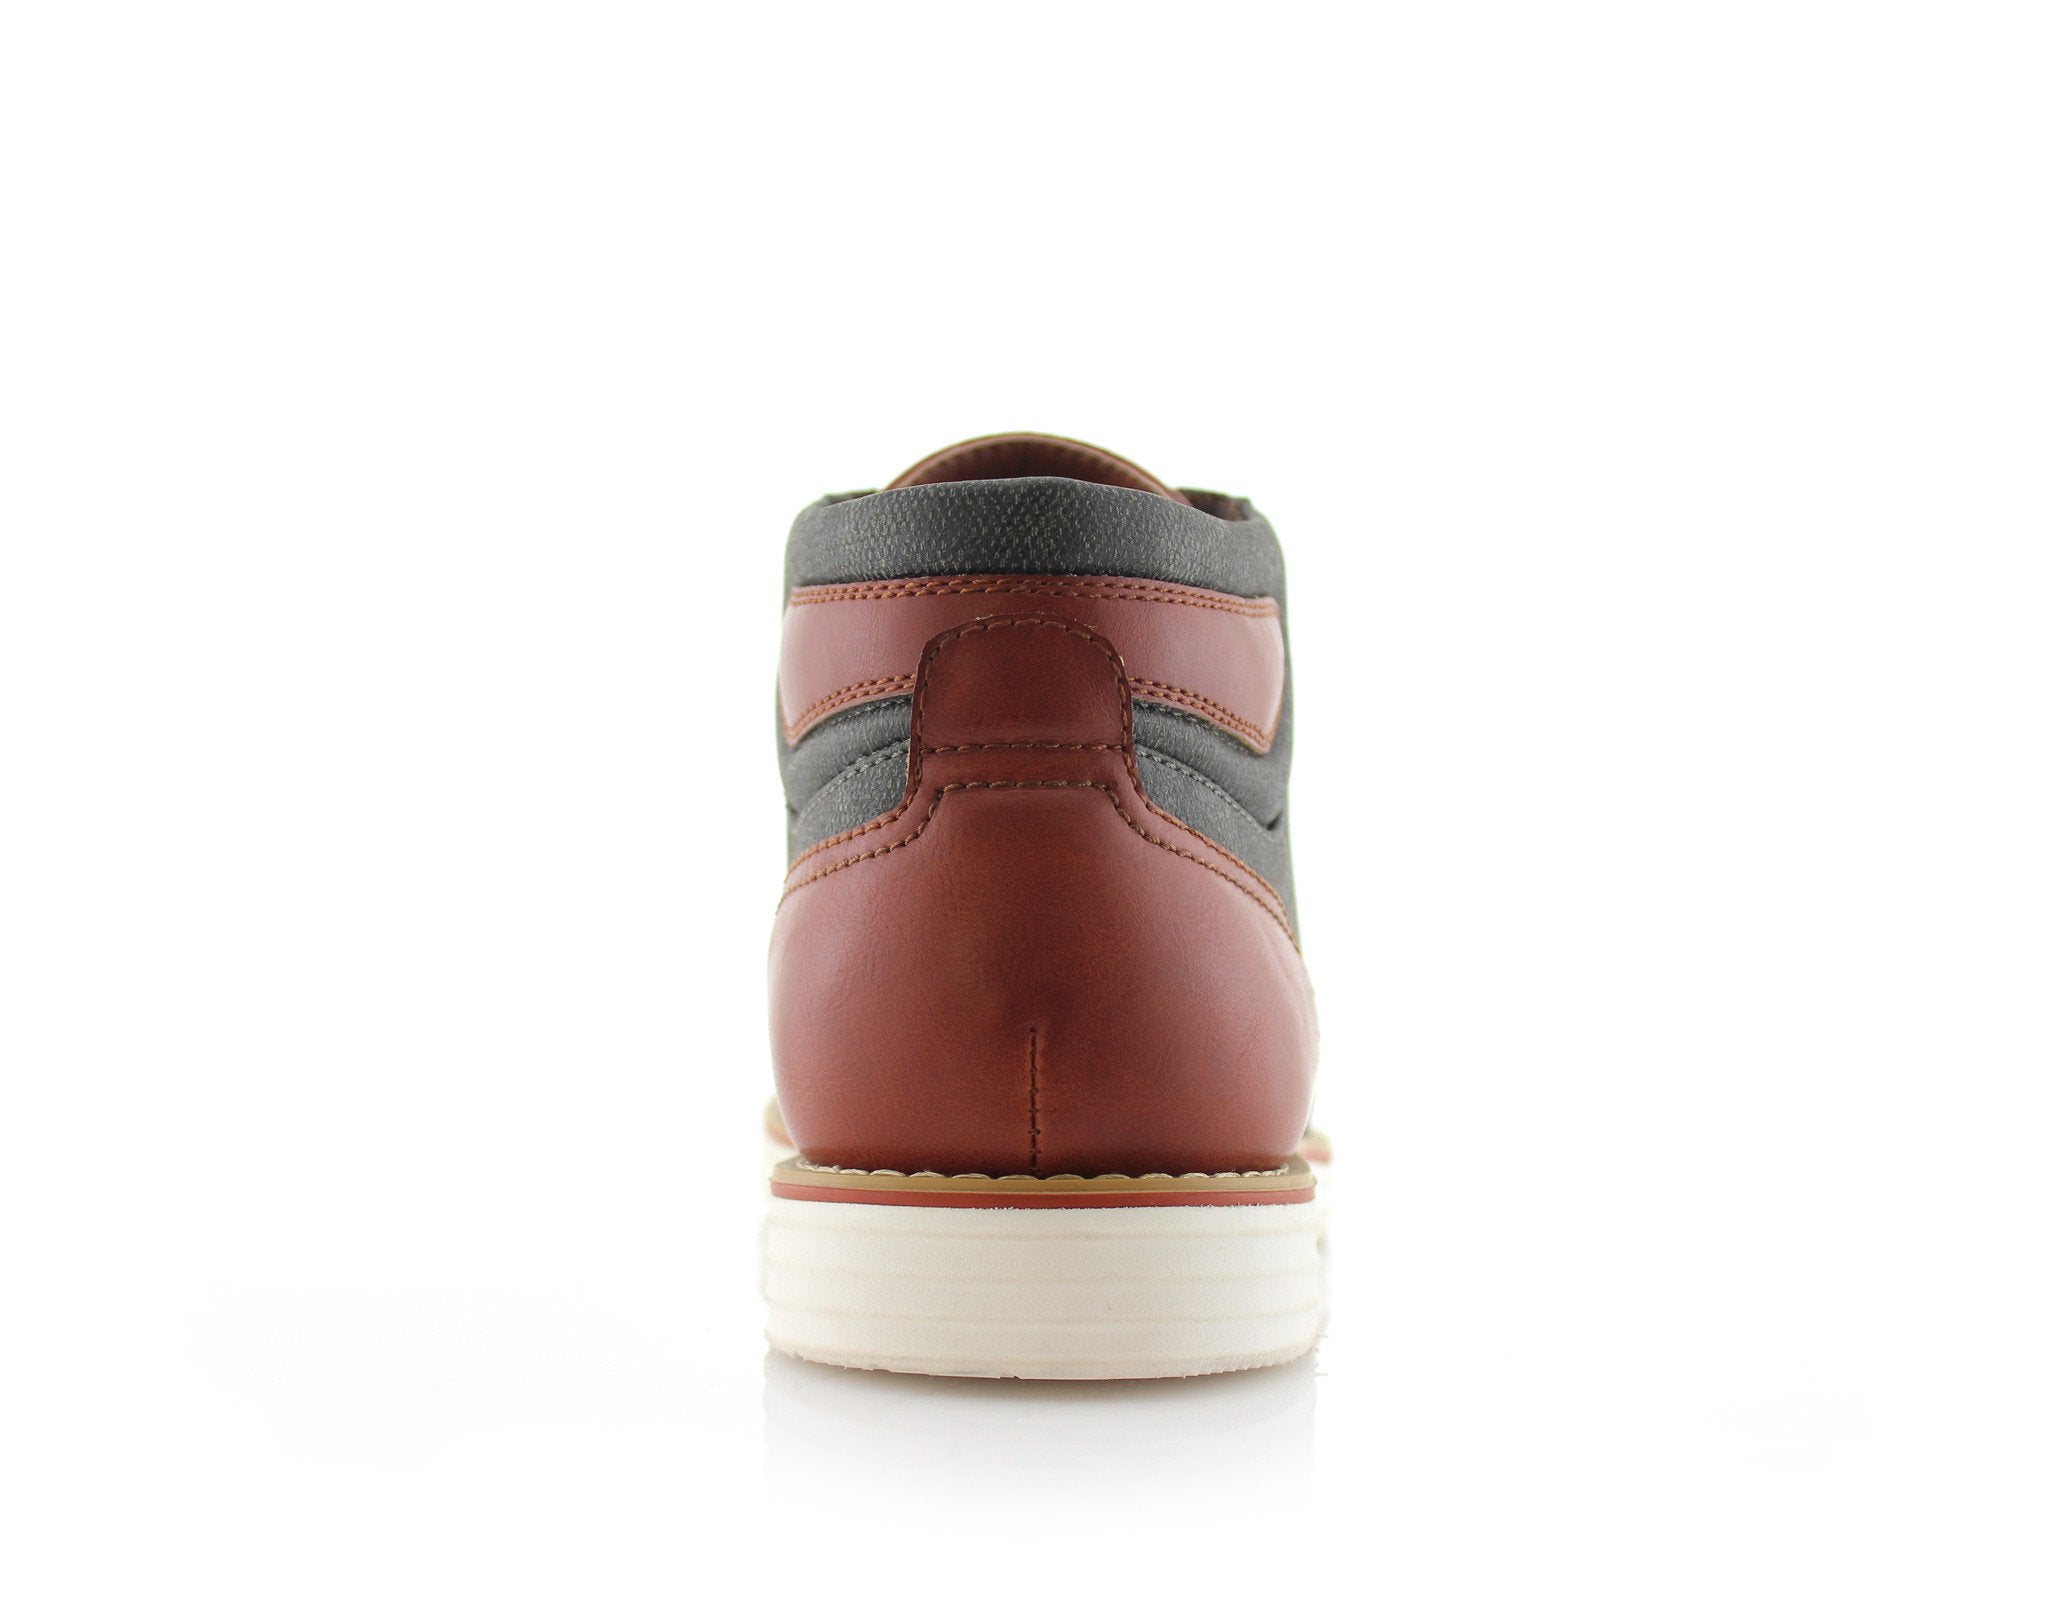 Two-Toned Chukka Sneaker Boots | Owen by Ferro Aldo | Conal Footwear | Back Angle View